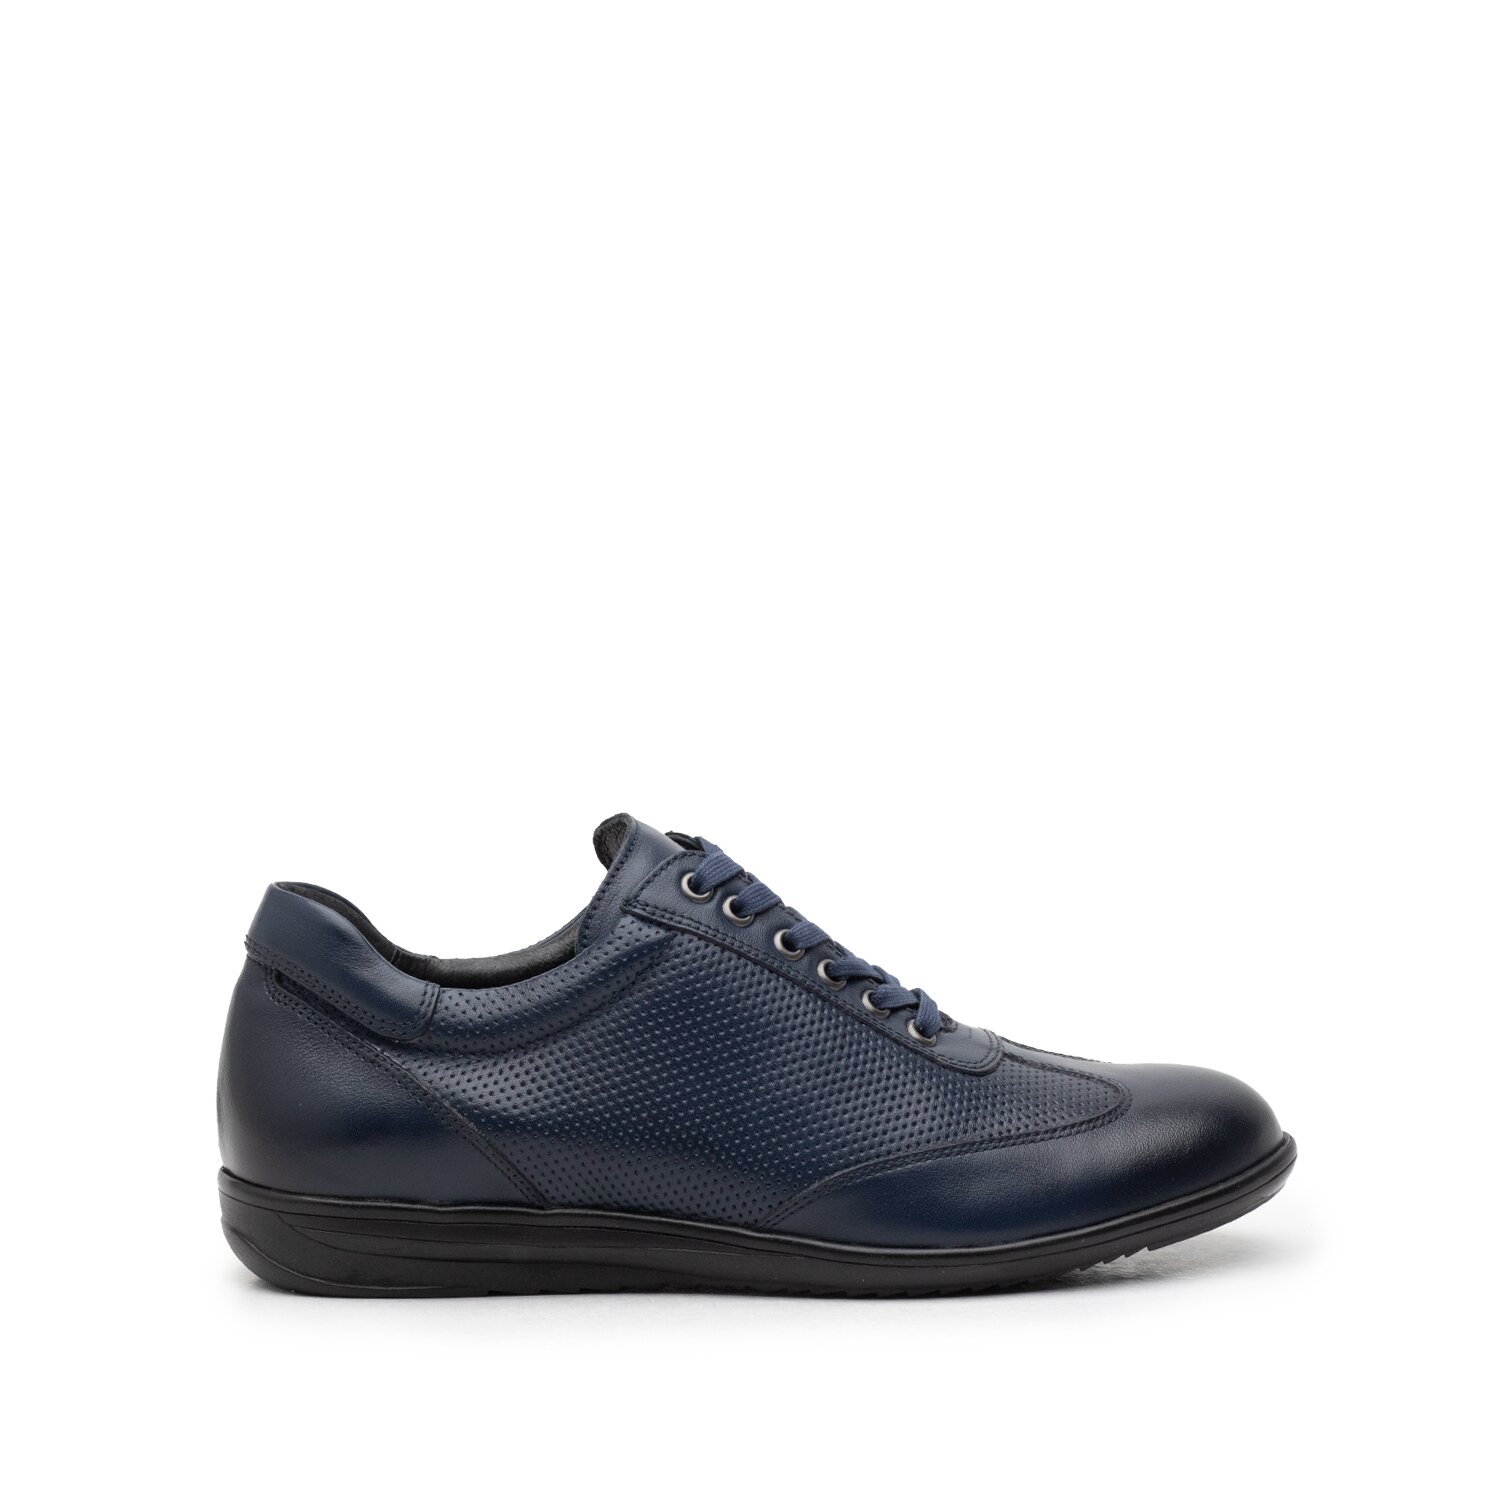 Pantofi casual/sport barbati din piele naturala, Leofex - 518 Blue box